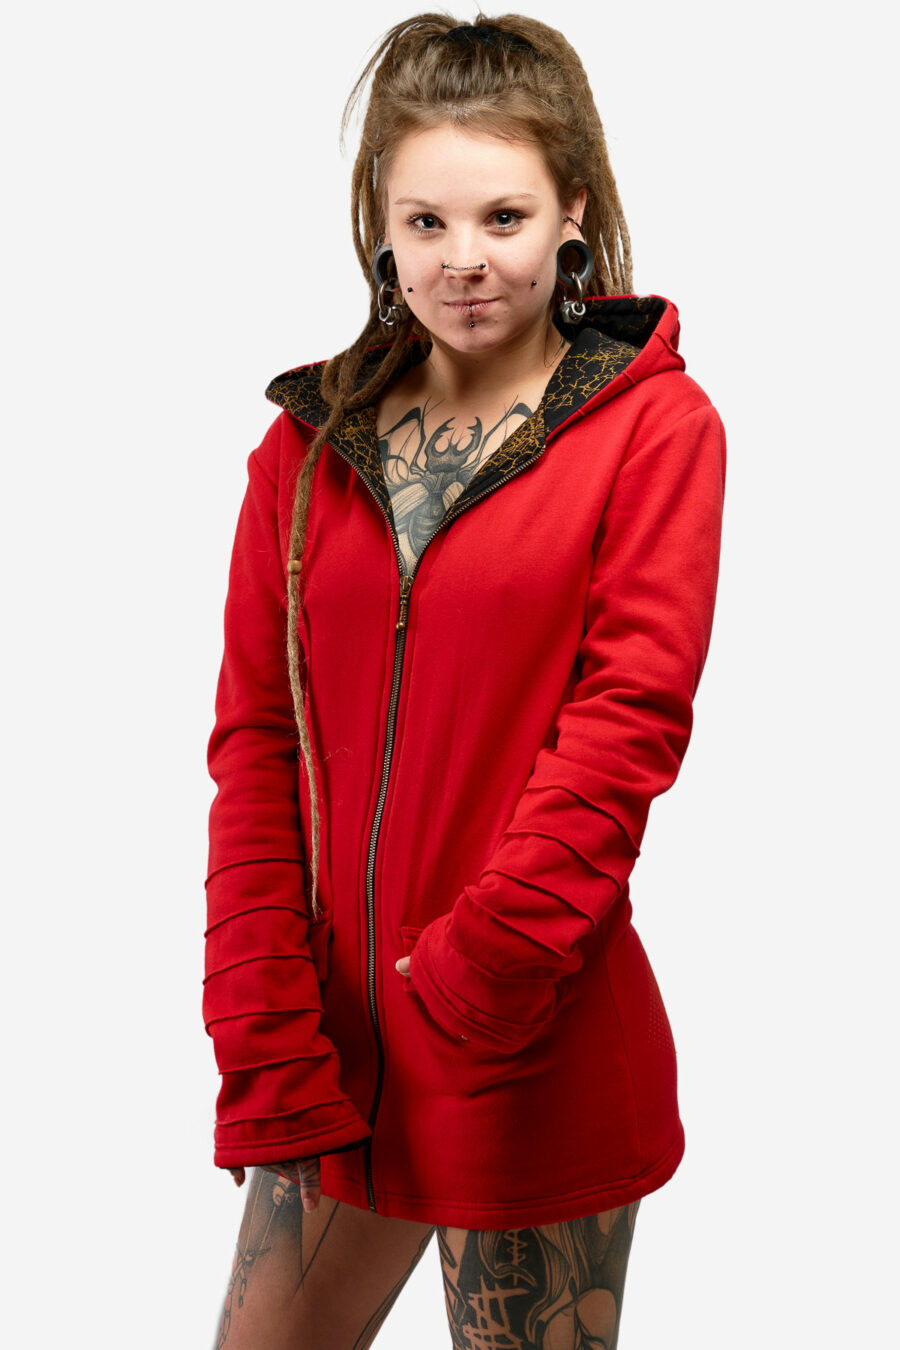 zola-thora-hoodie-red-for-women-with-handmade-screen-print-alternative-streetwear-avanyah-clothing